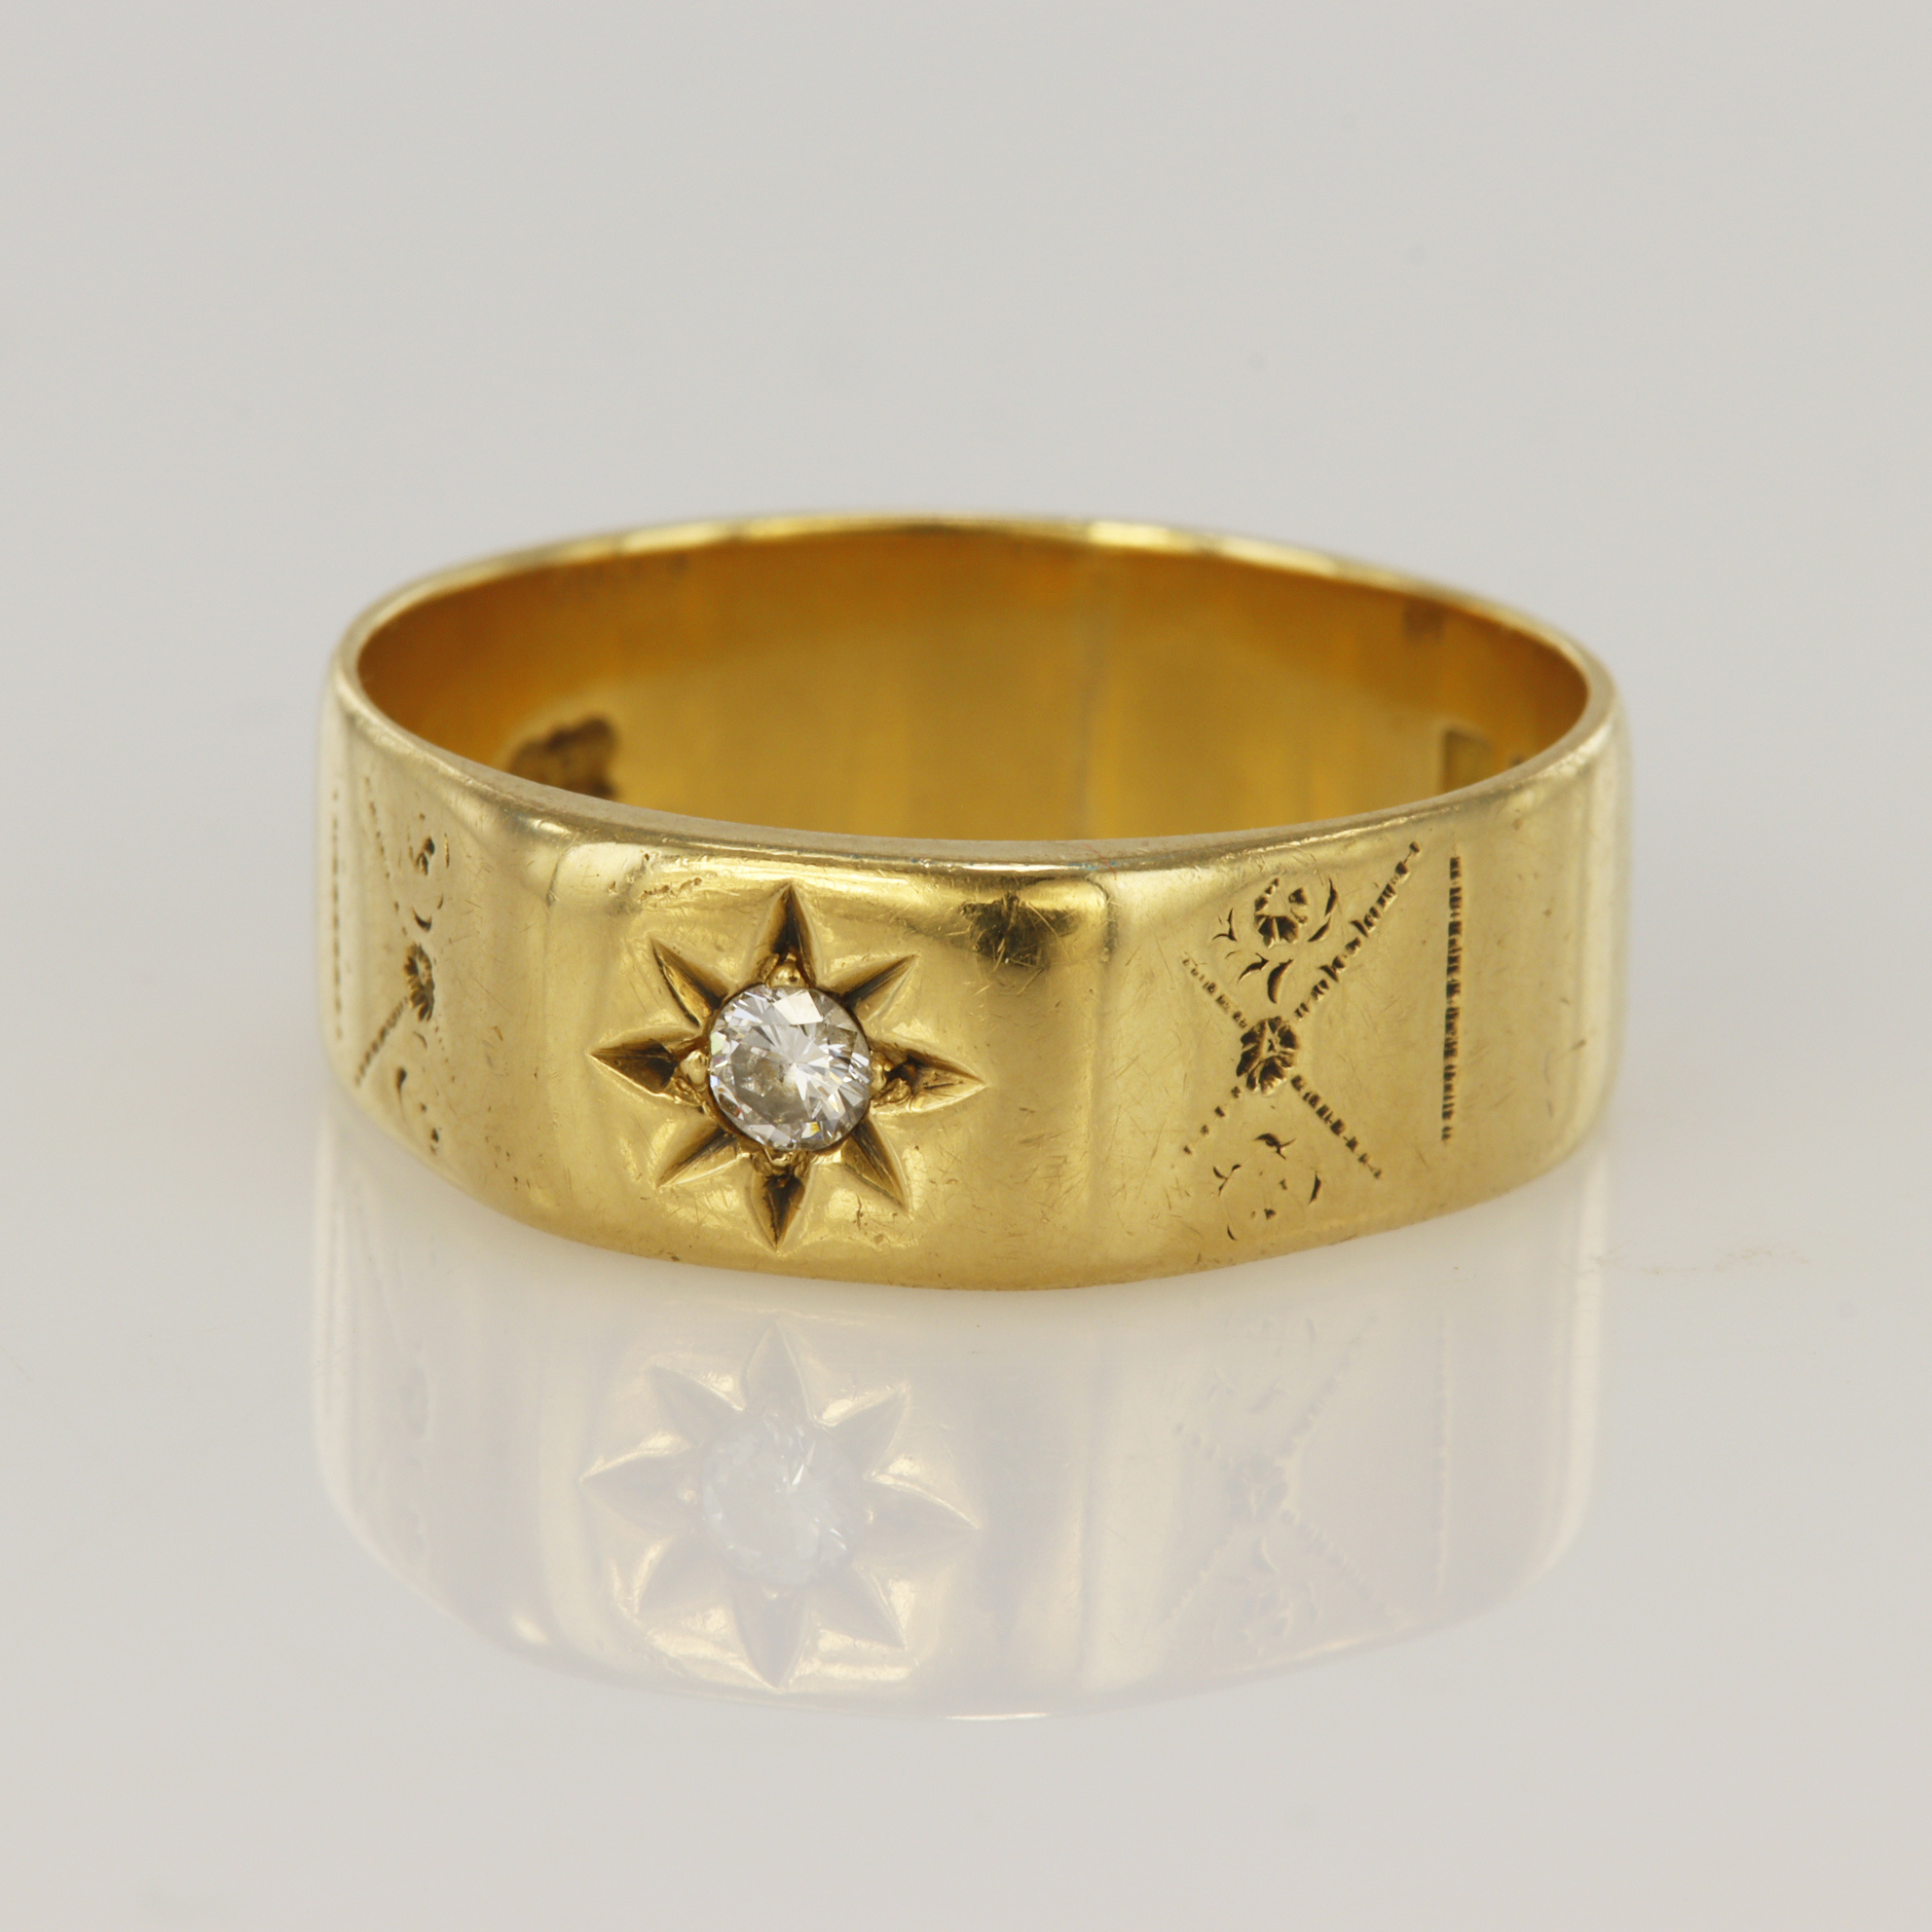 18ct yellow gold vintage diamond signet ring, star set round brilliant cut diamond approx. 0.10ct,